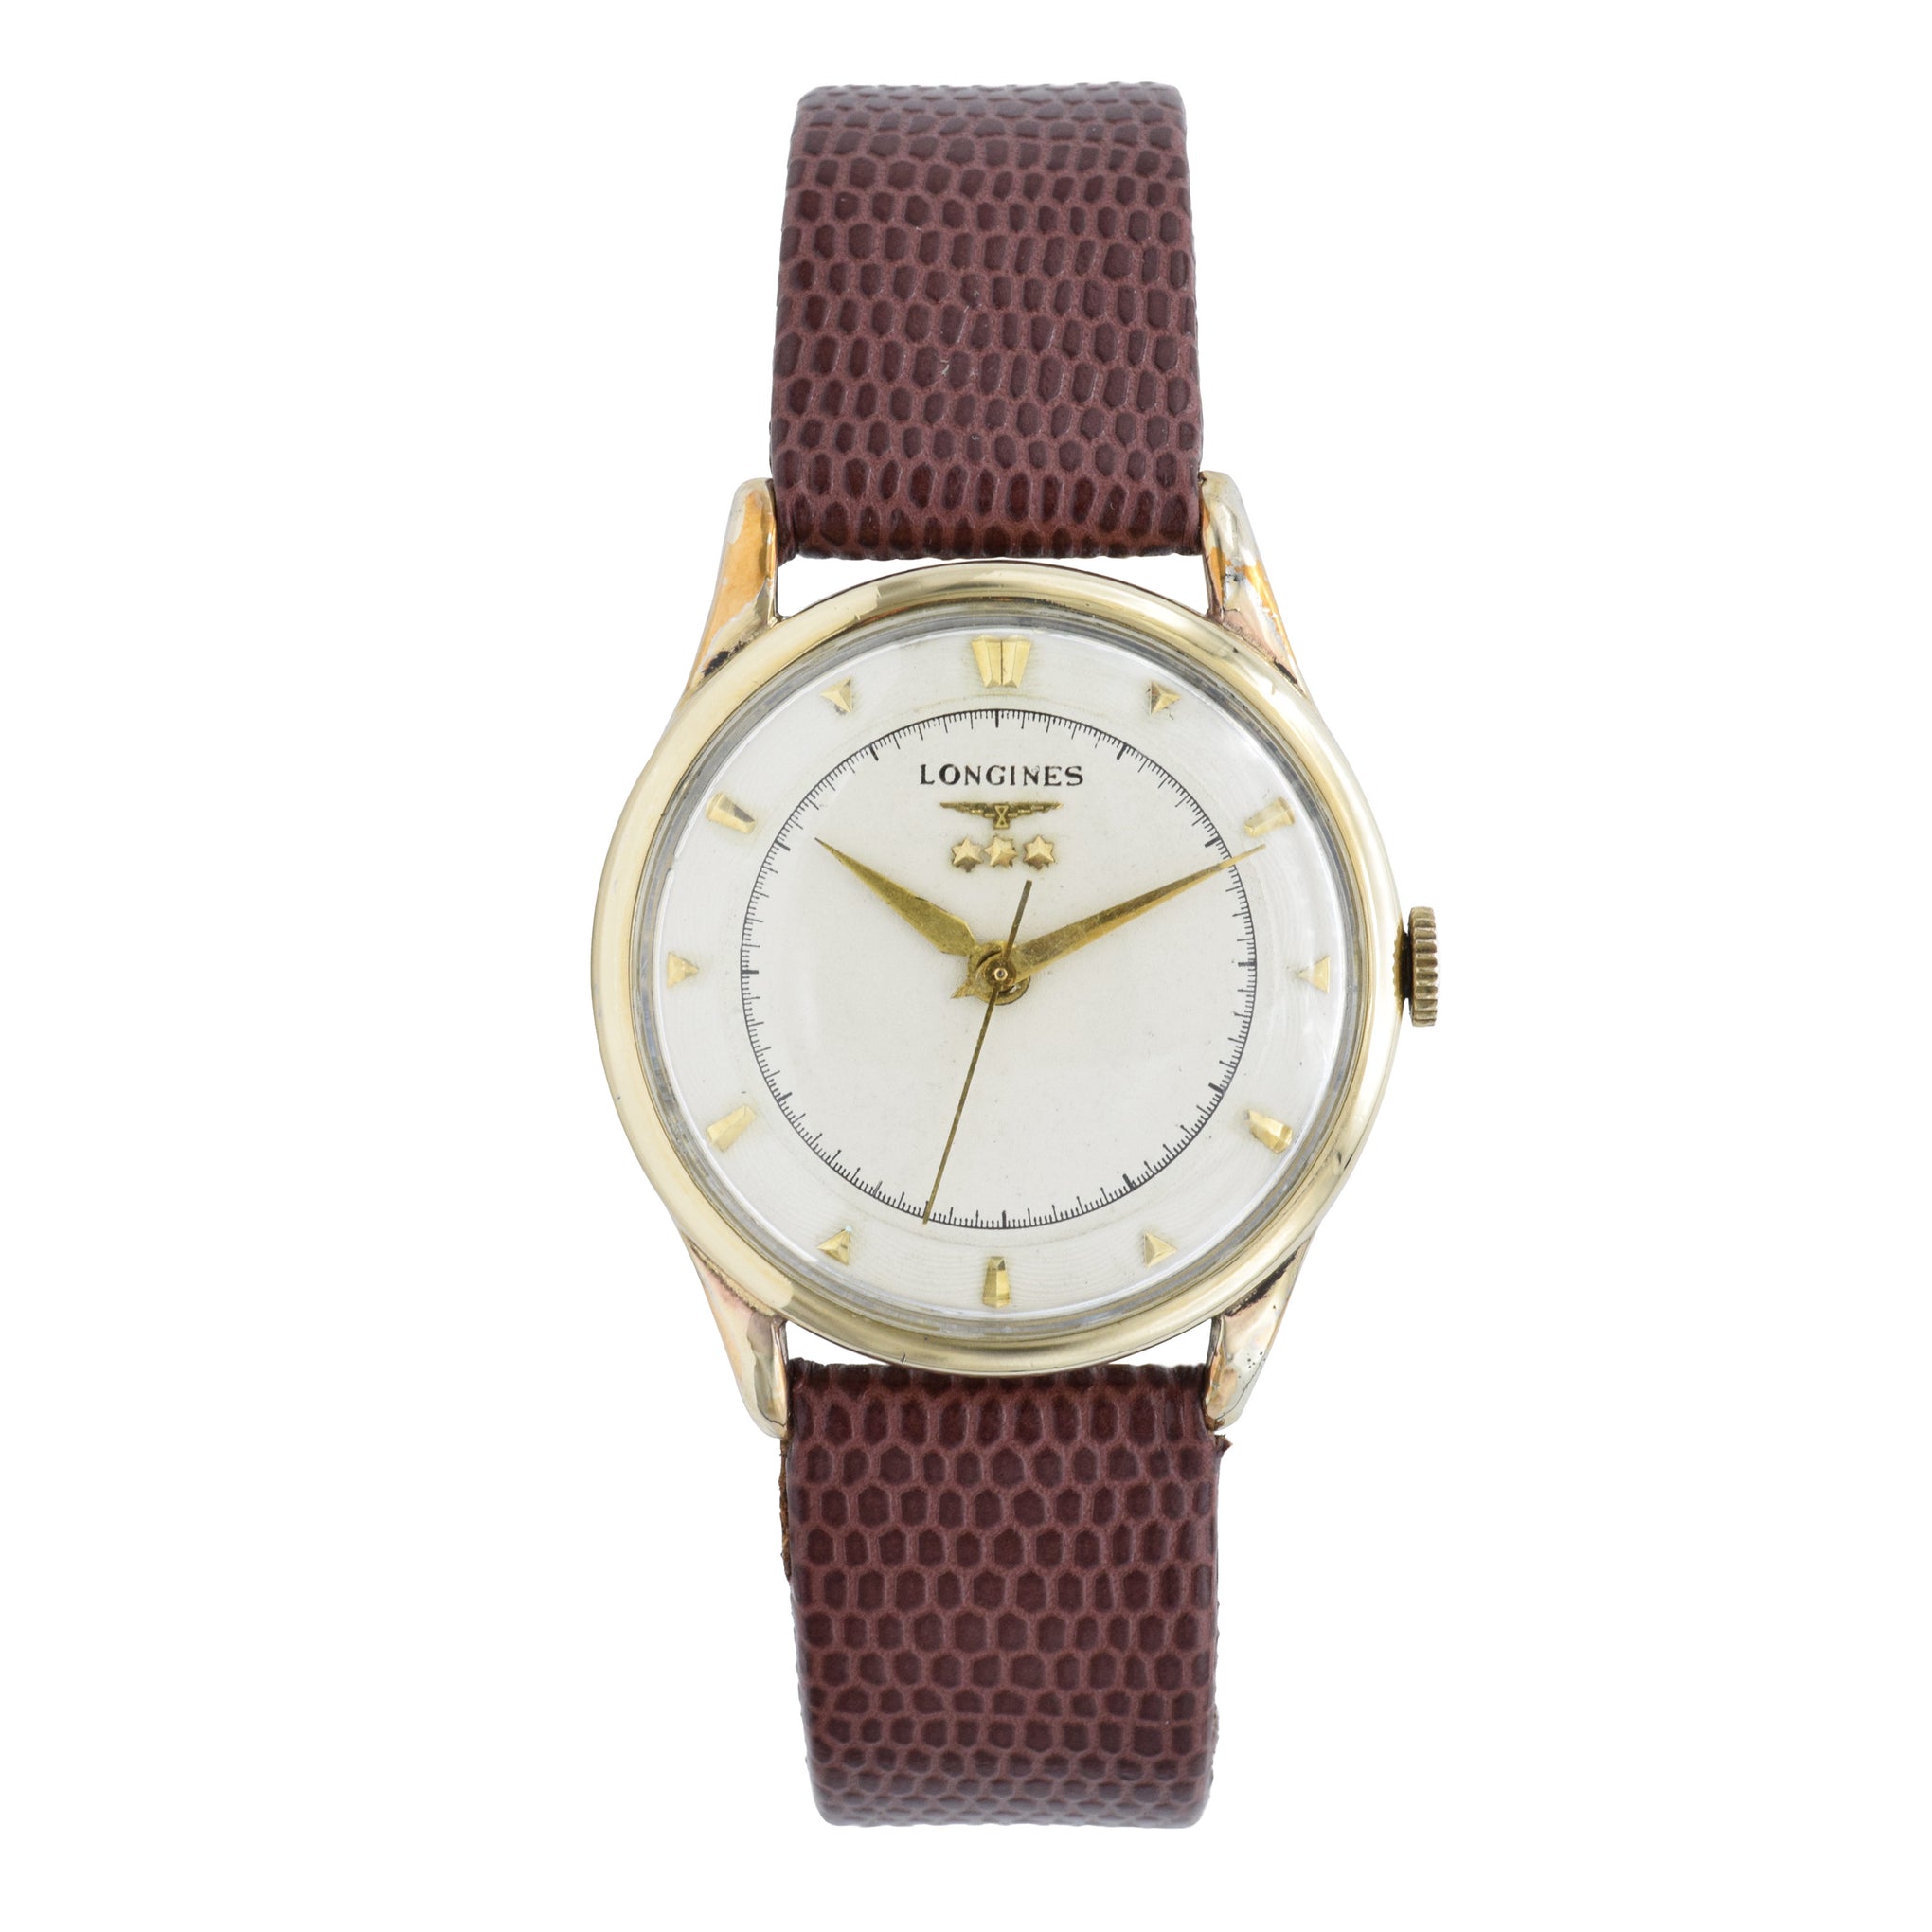 Vintage 1960s Longines Watch